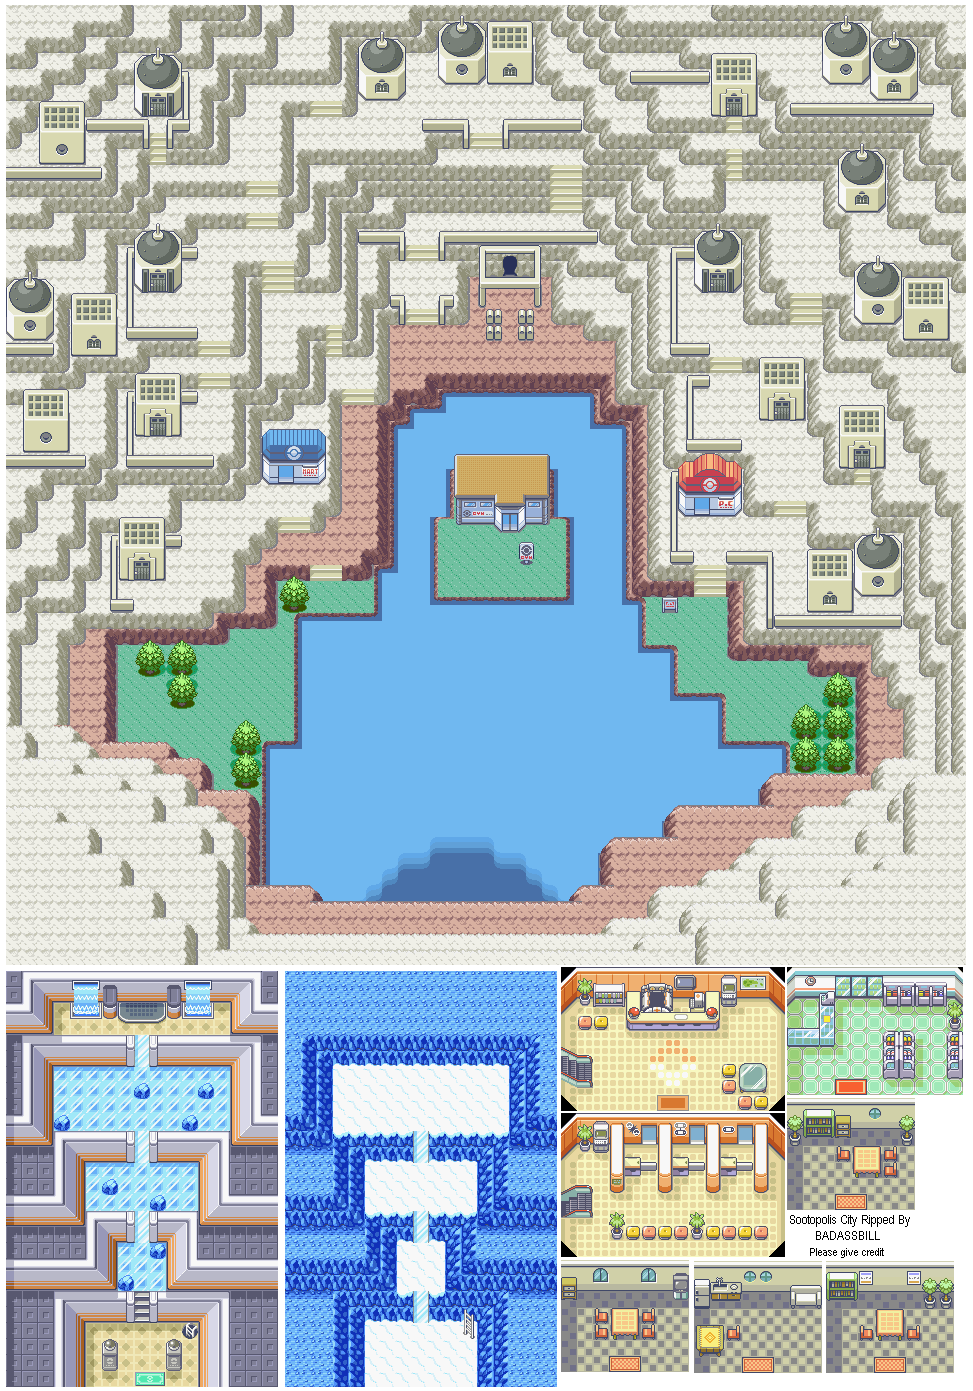 Pokémon Ruby / Sapphire - Sootopolis City